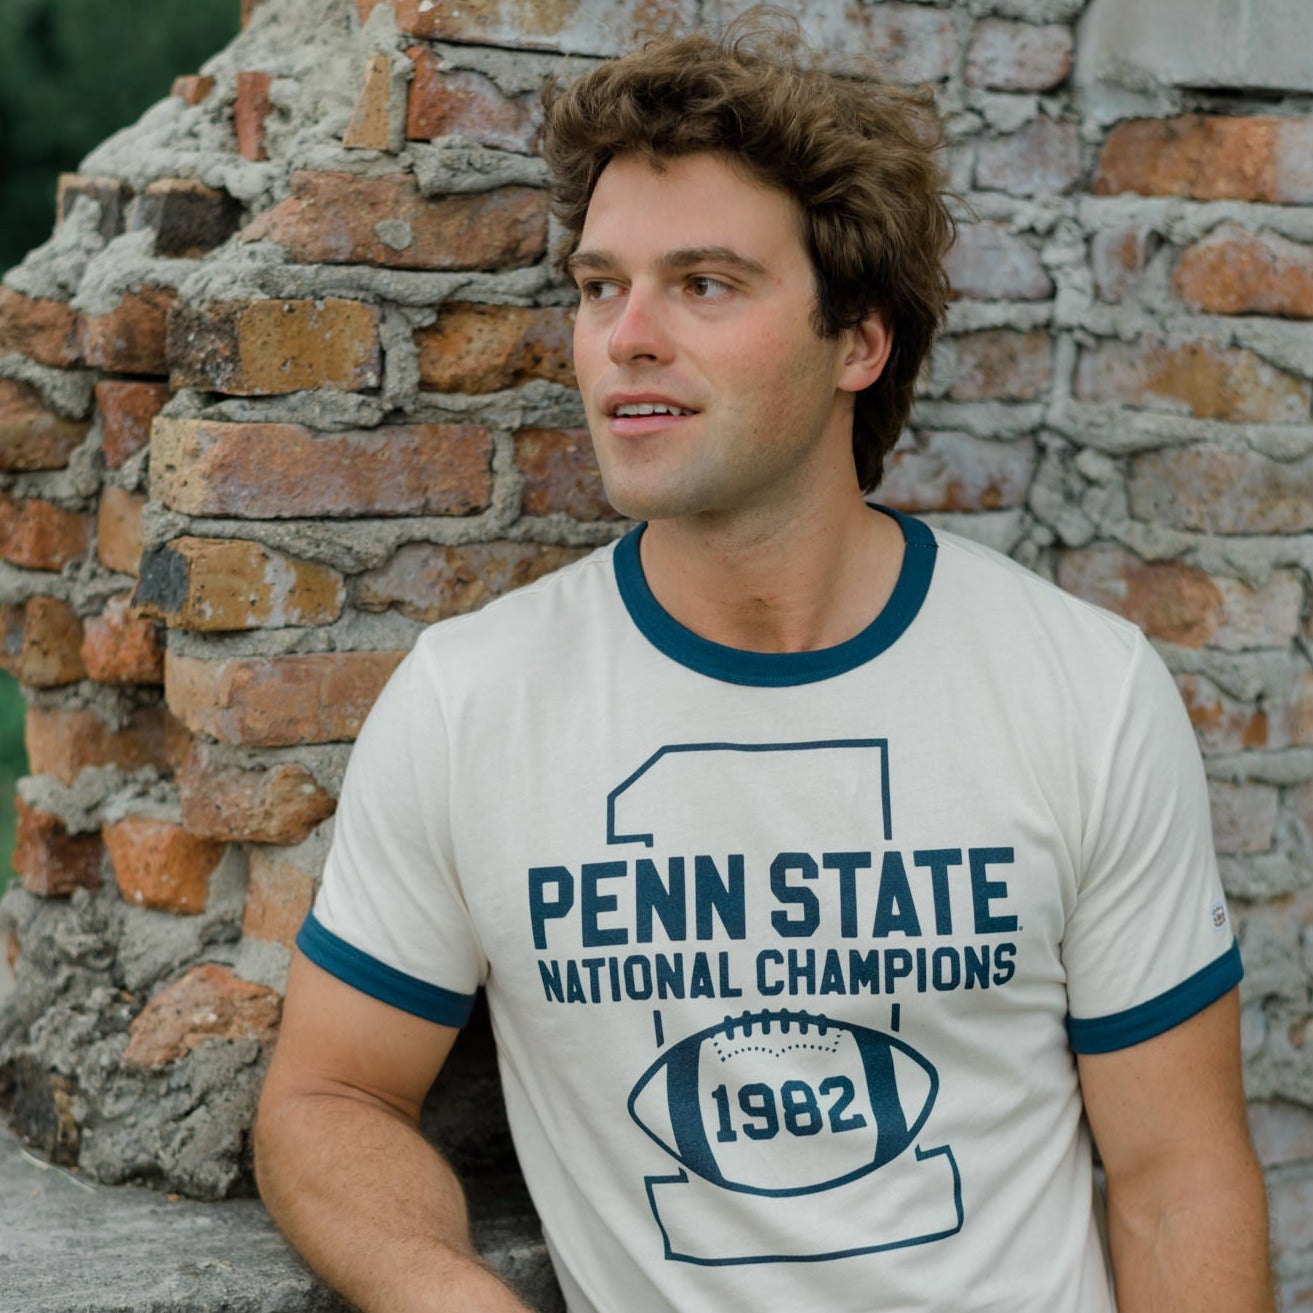 Penn State Football 1982 National Champions Ringer Tee